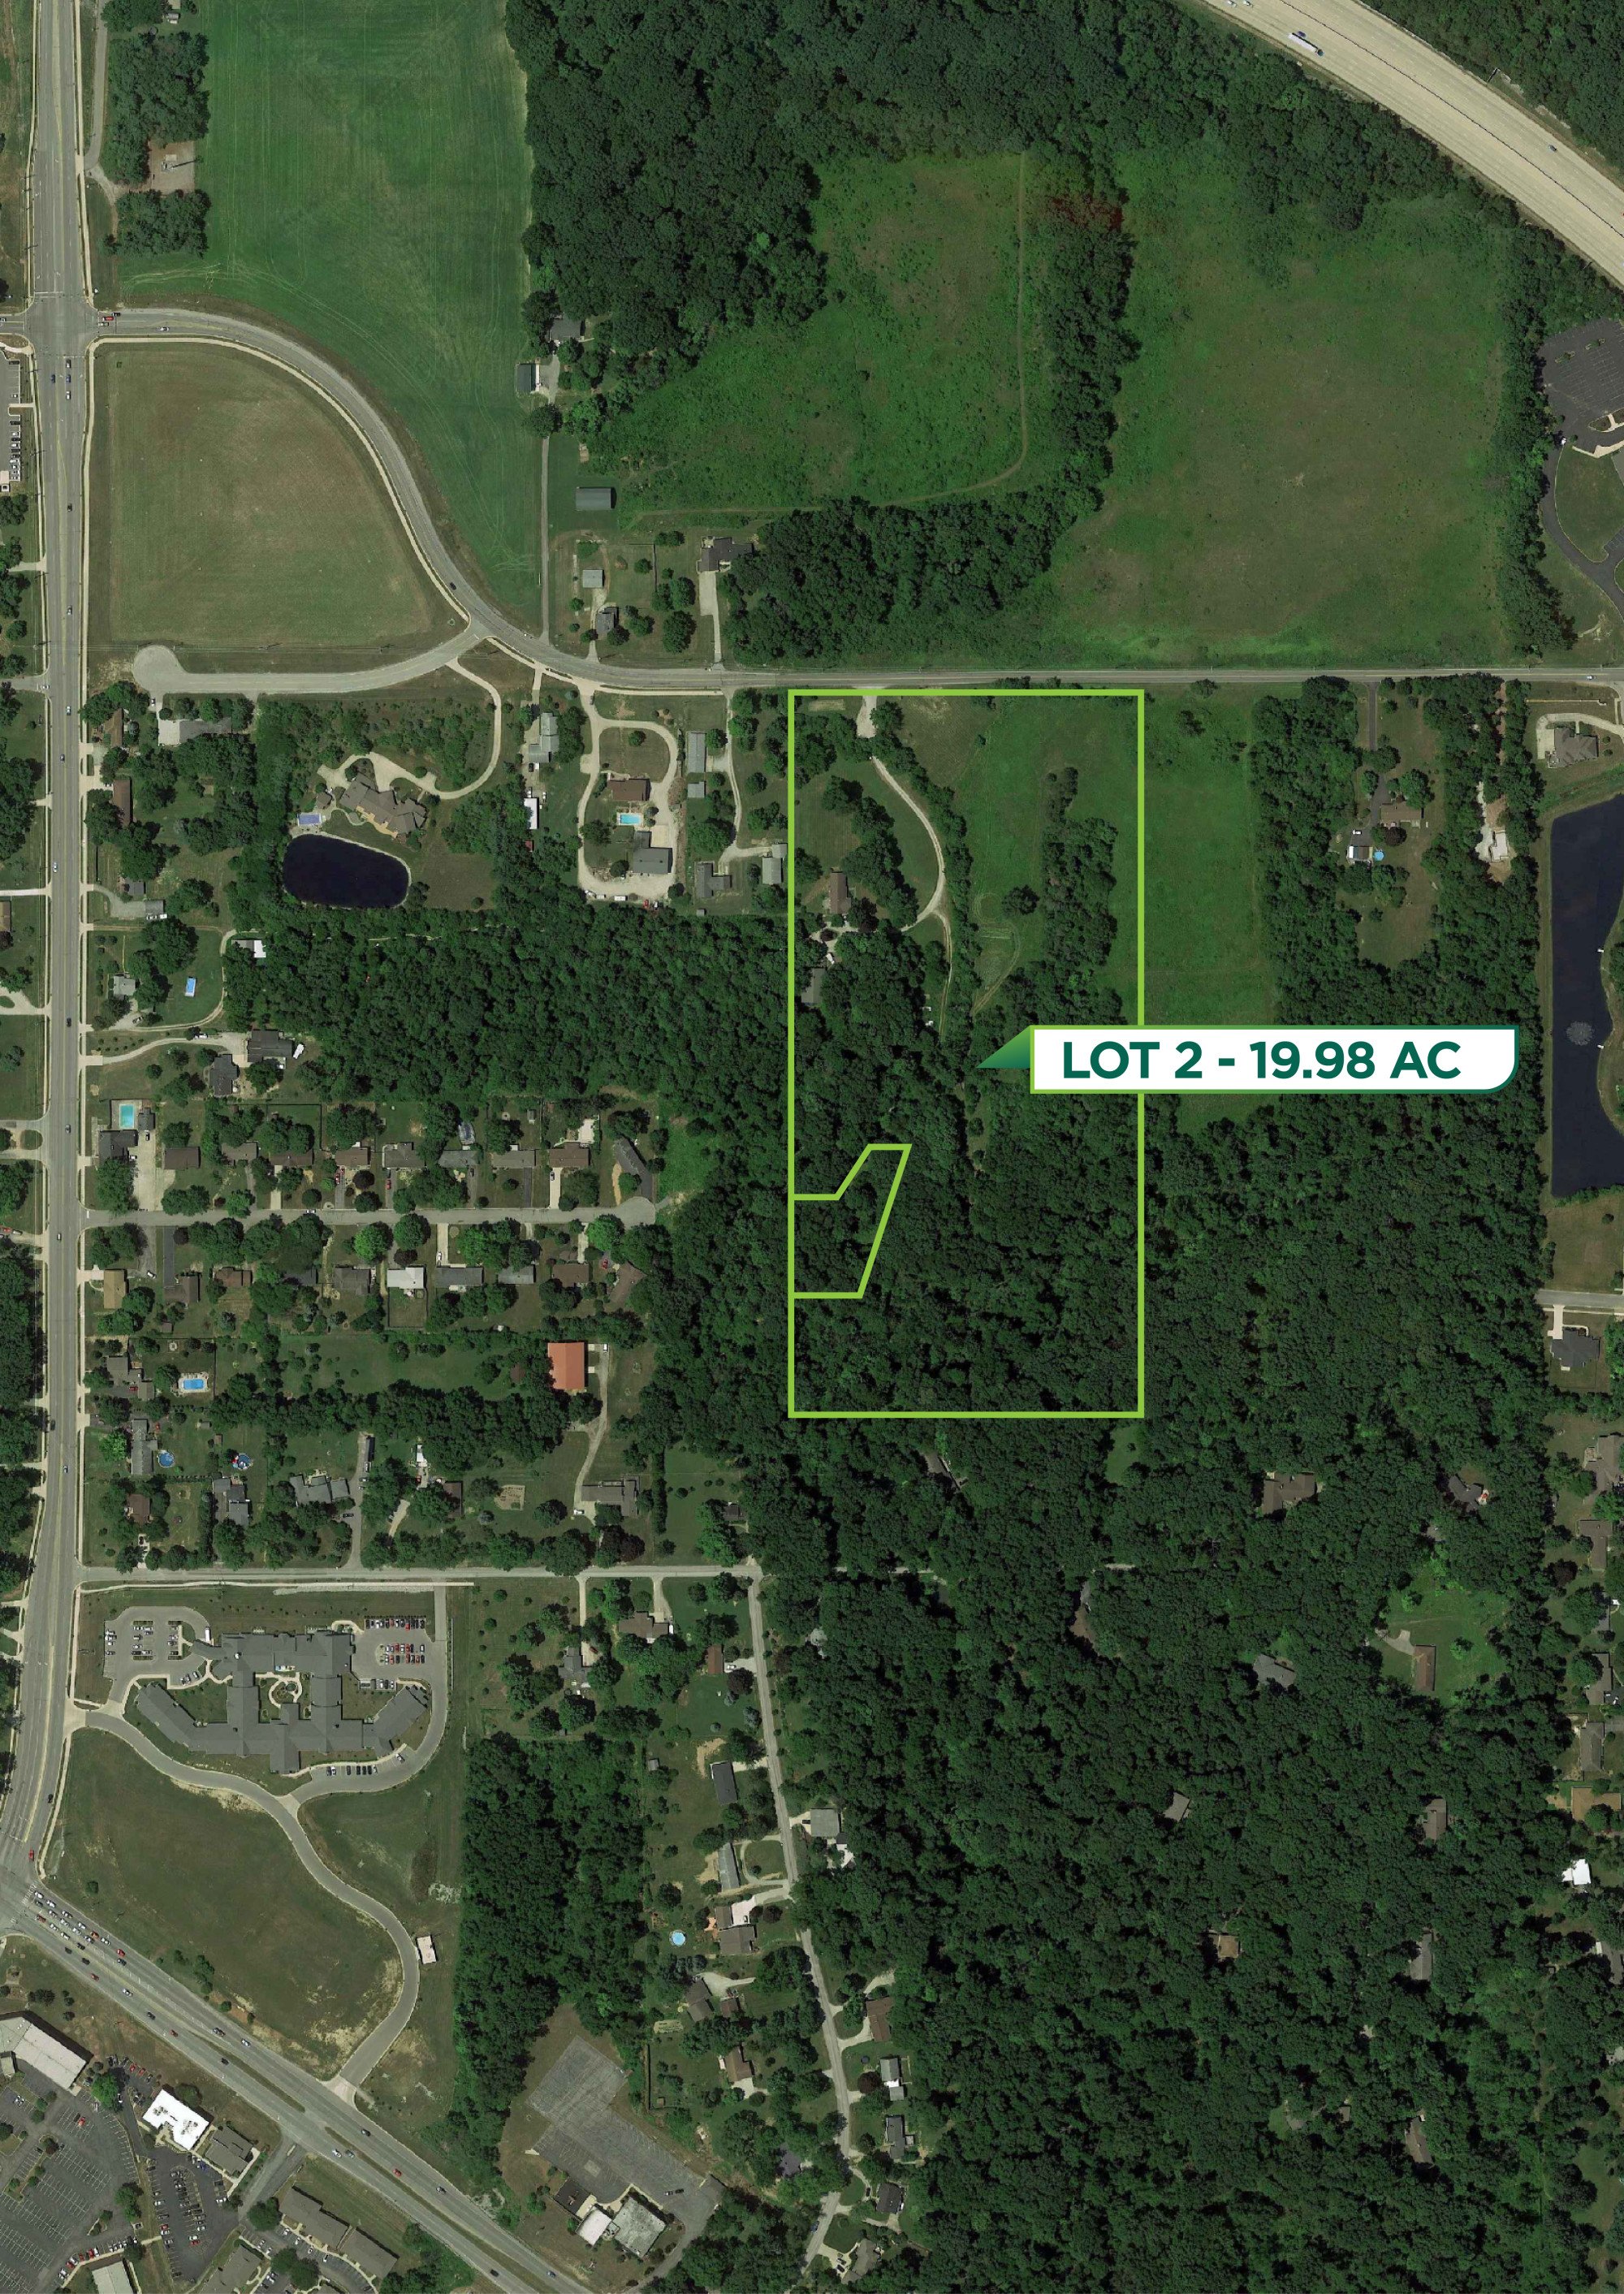 Sturges Property Group - Land For Sale Southwest Fort Wayne Indiana Development Land 